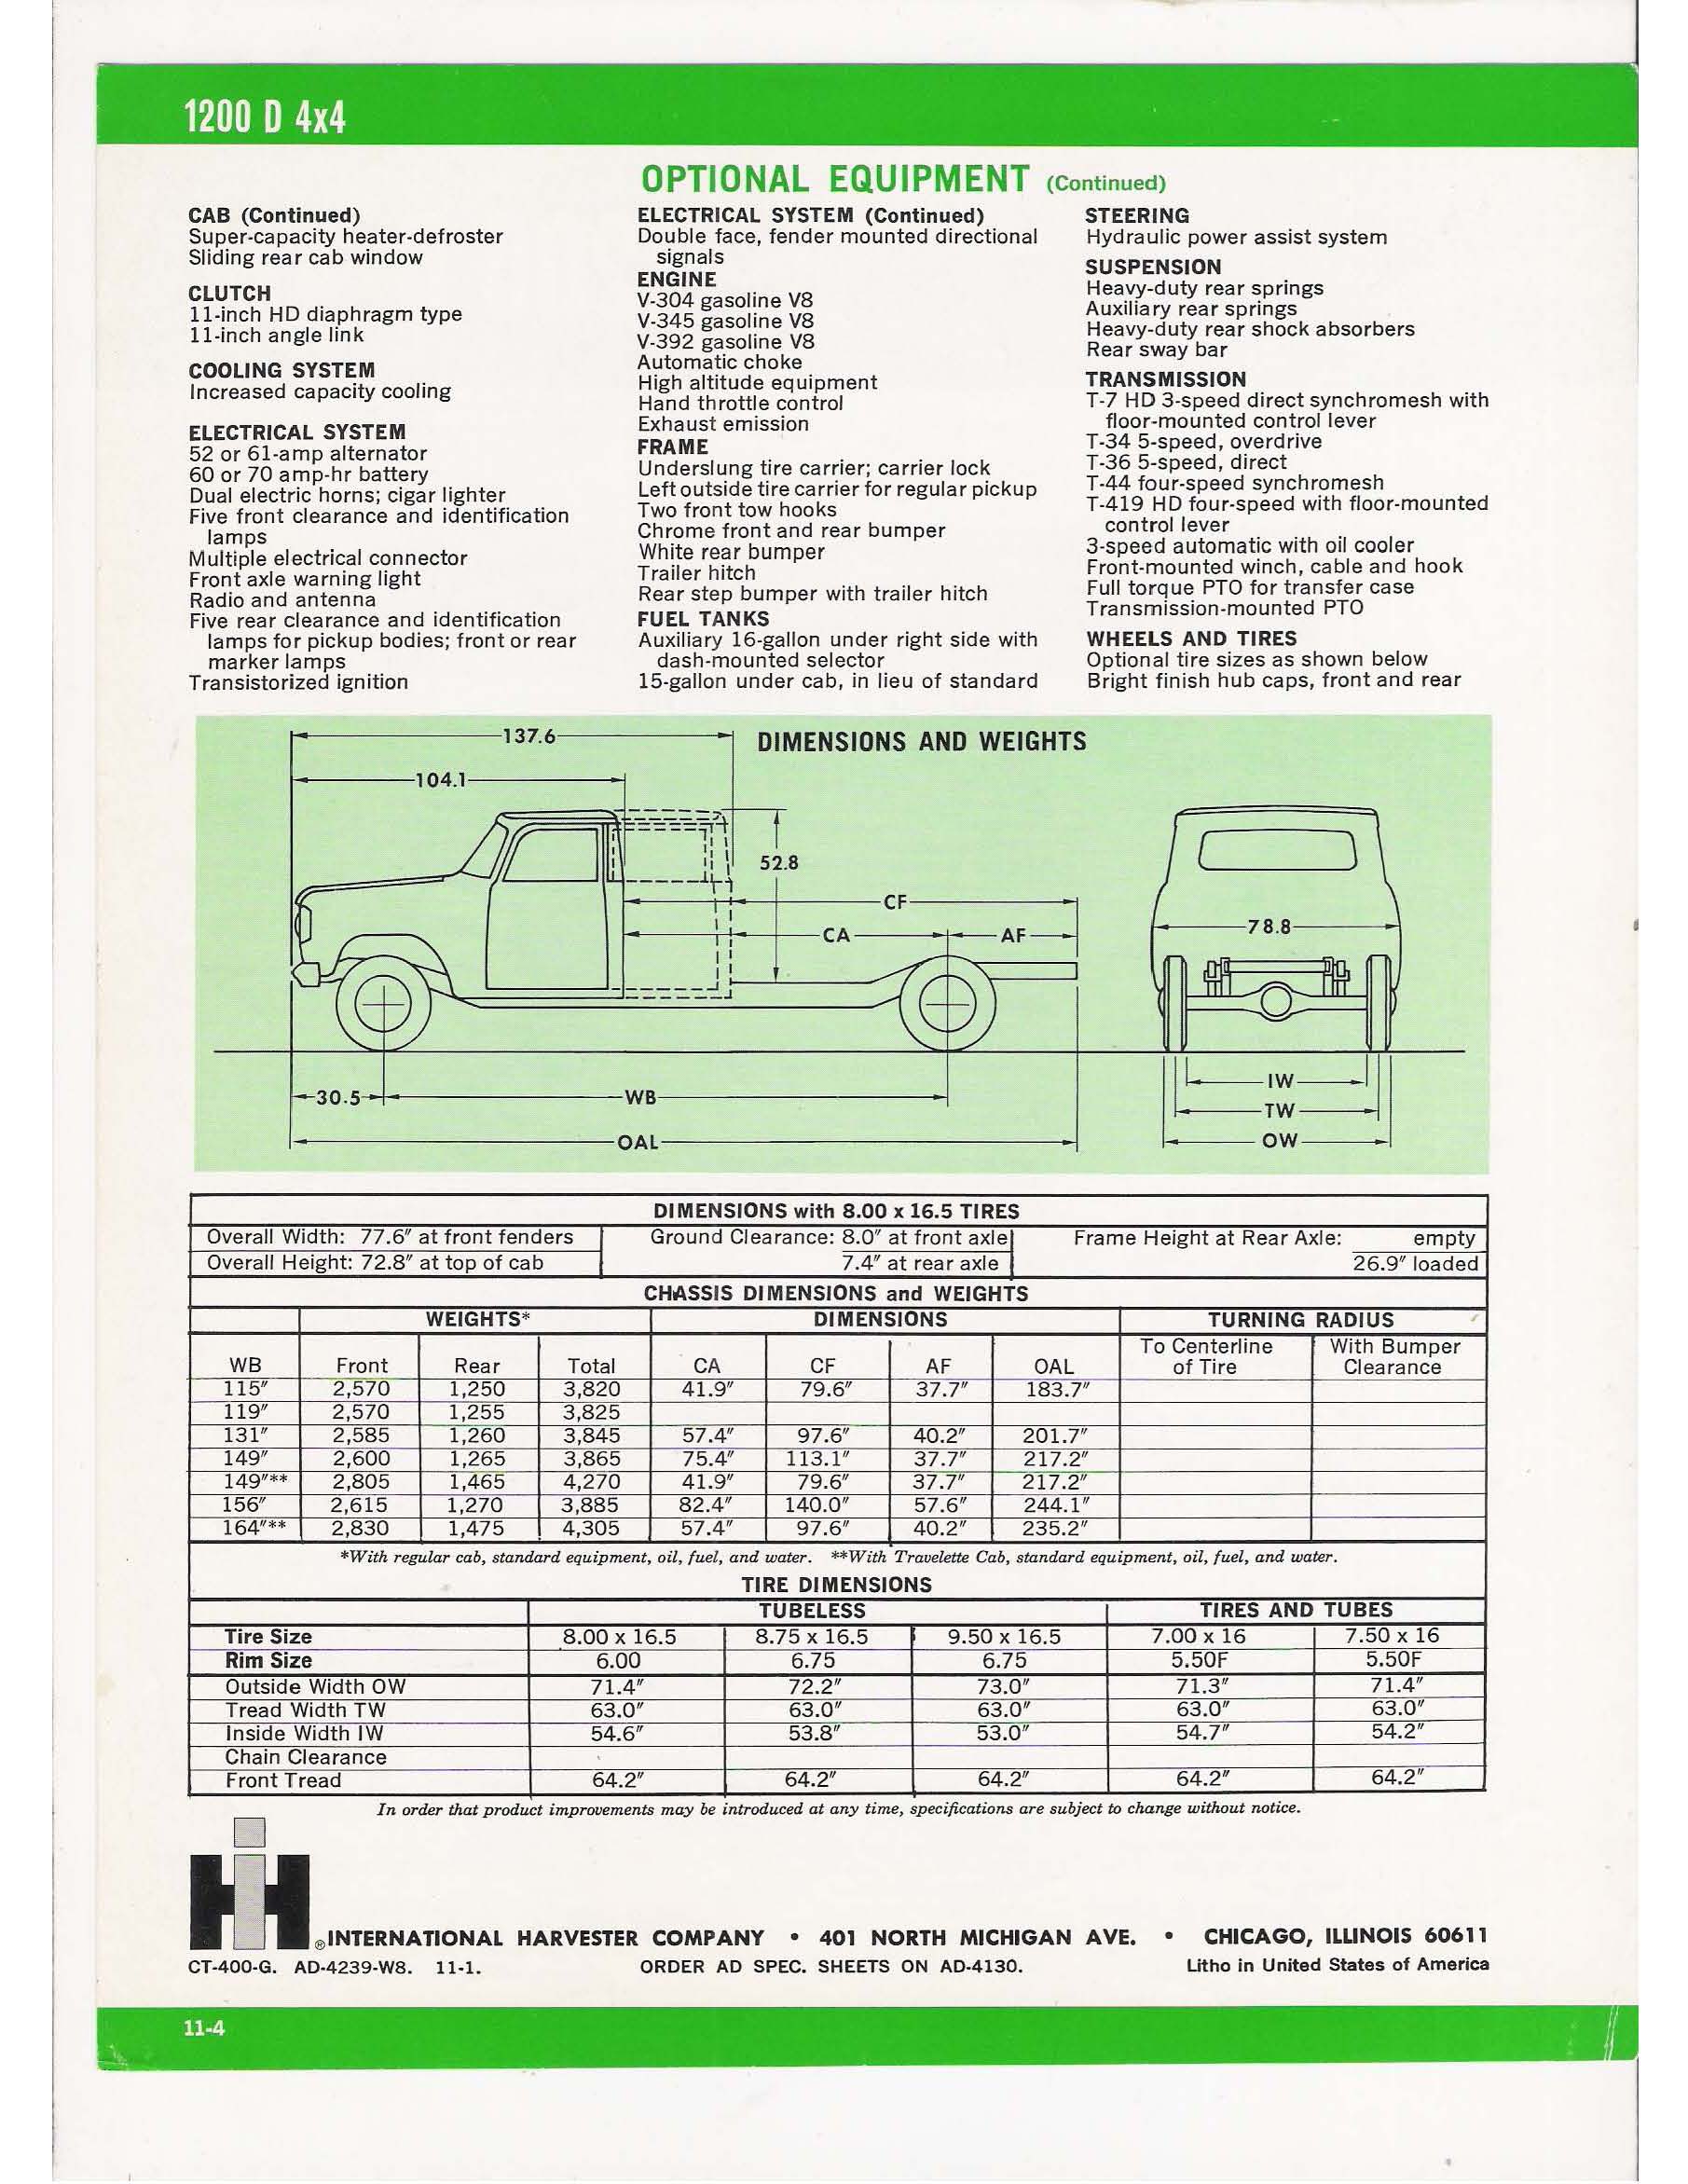 1969 International 1200D 4X4 Folder Page 2